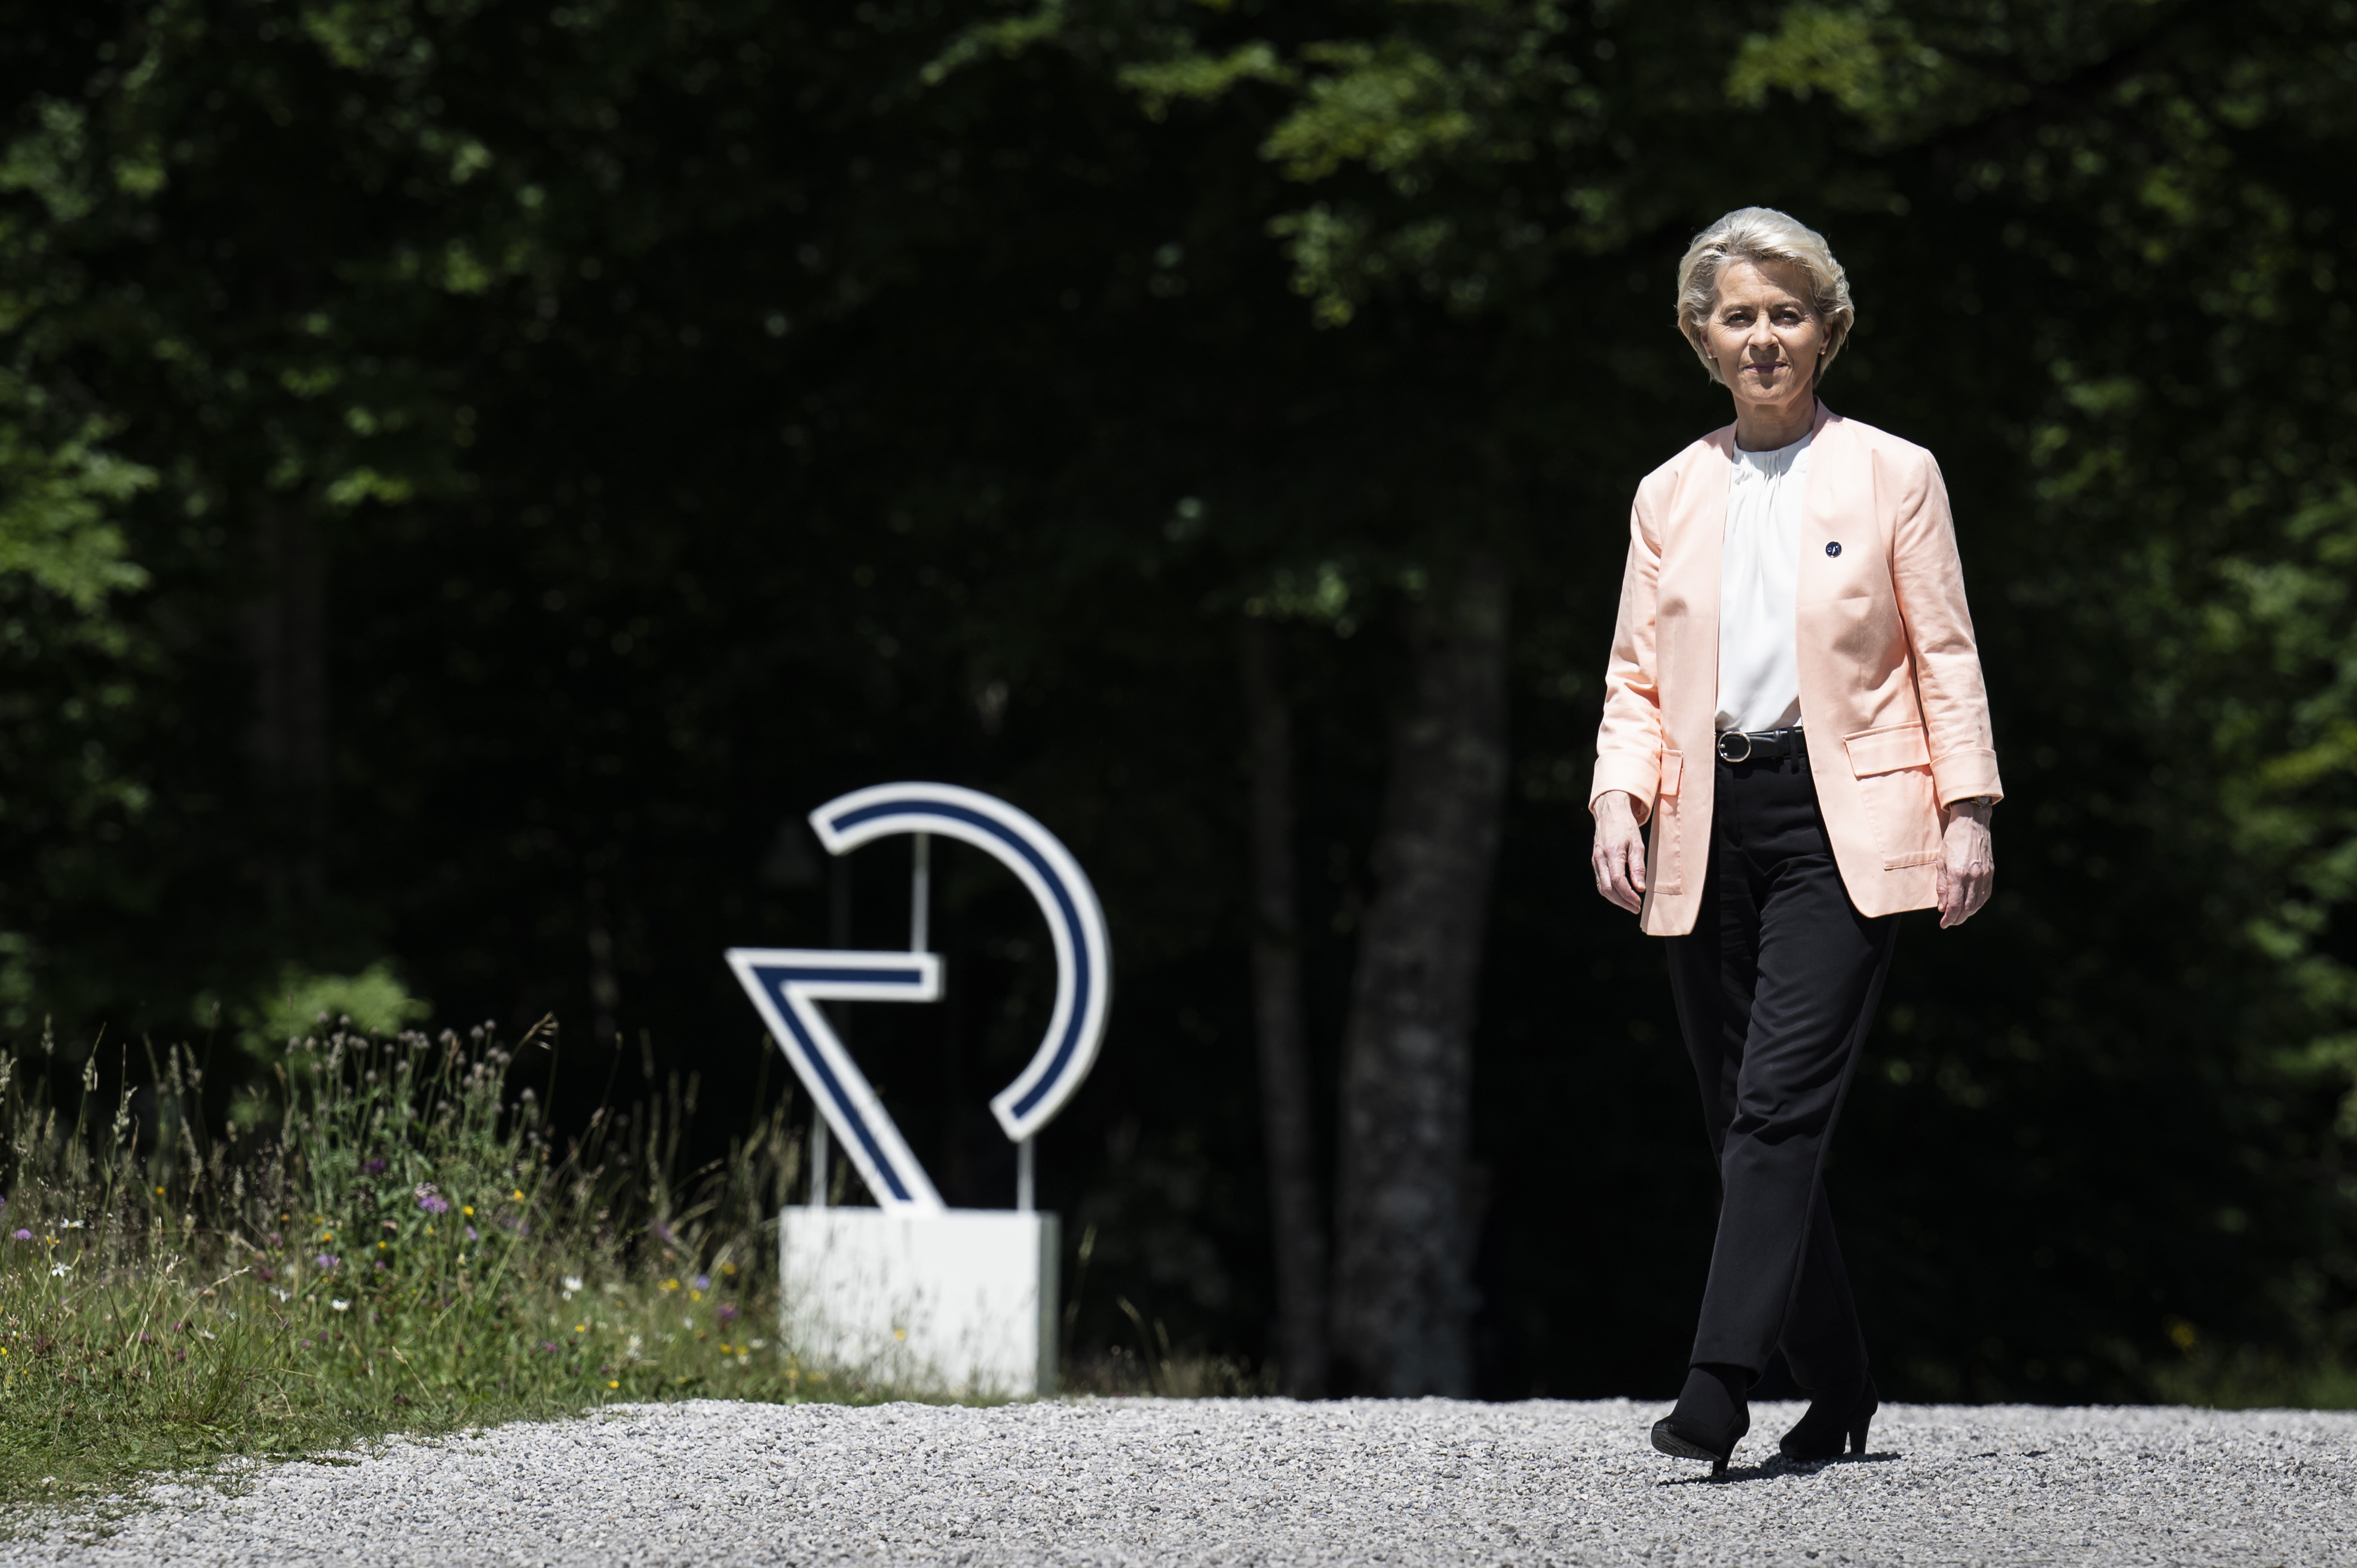 Ursula von der Leyen (European Commission President) on her way to the official welcome to the G7 Summit in Schloss Elmau.